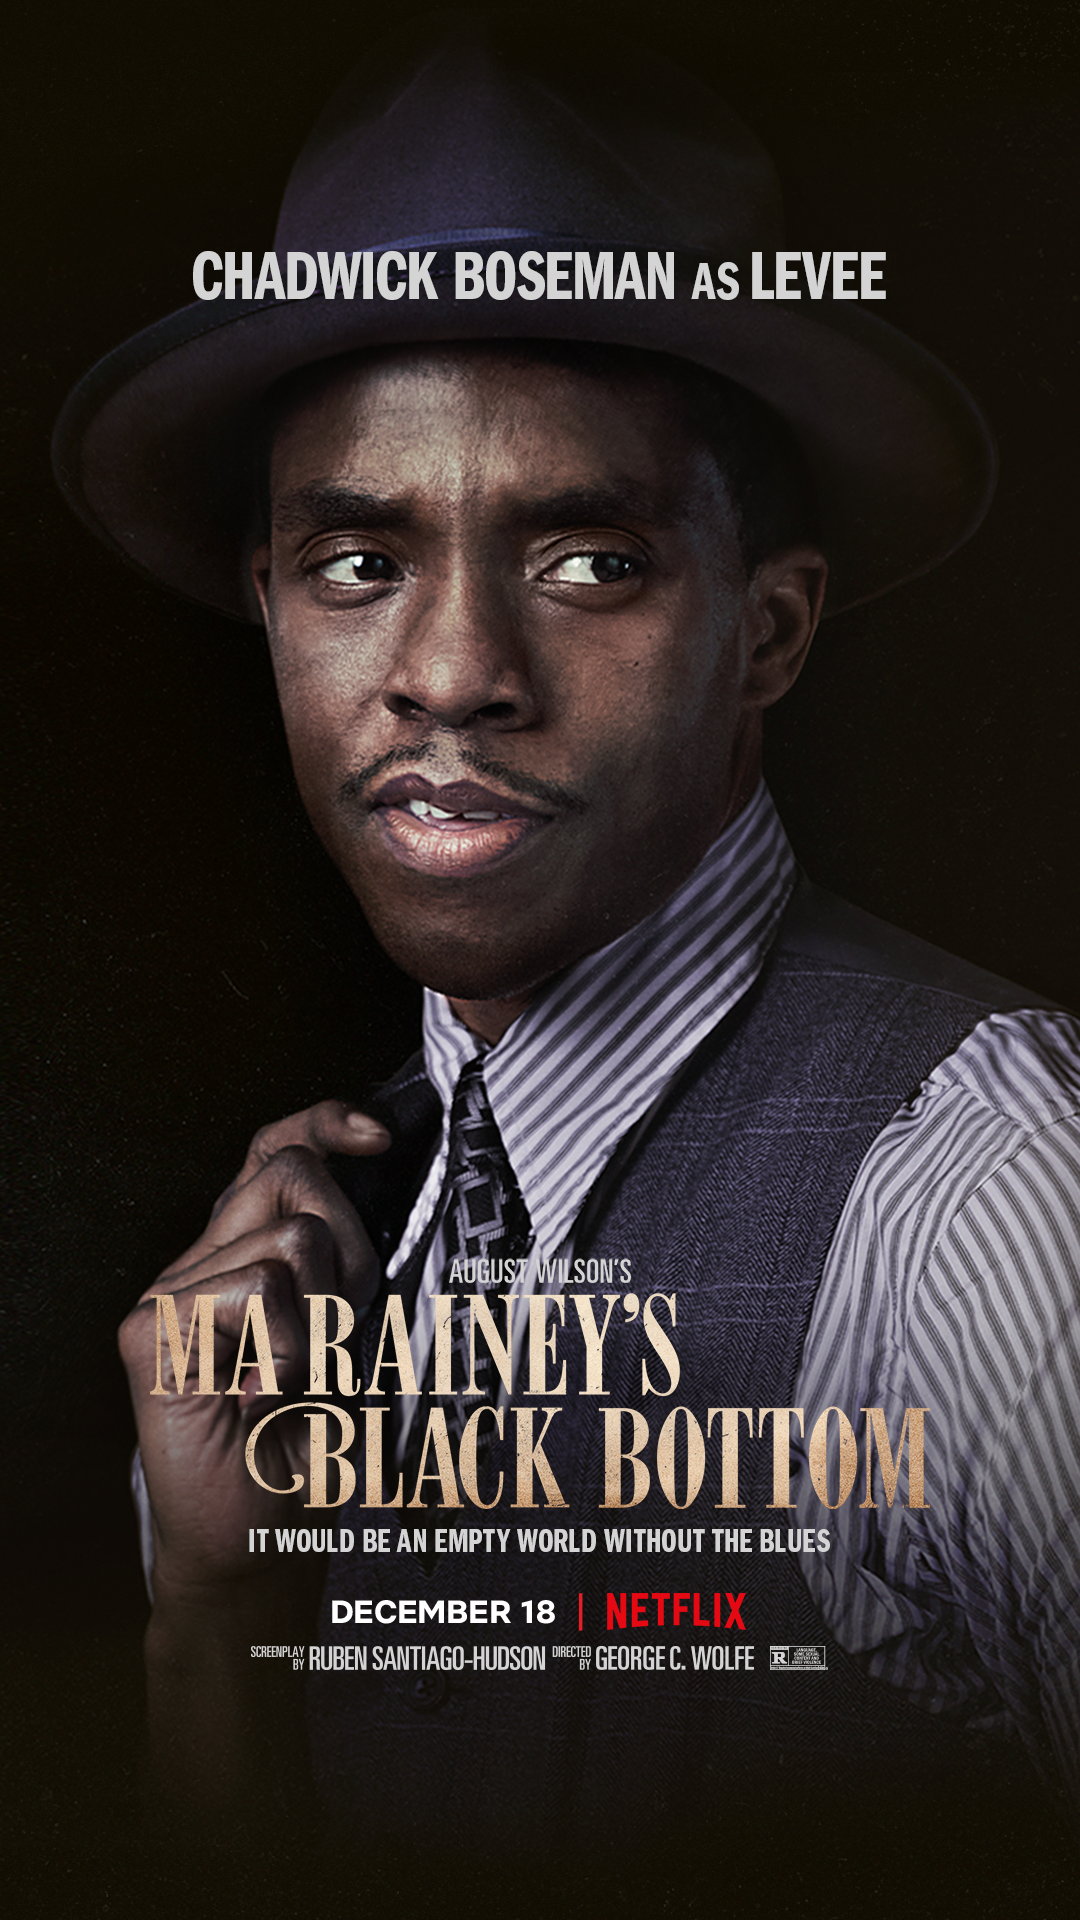 Chadwick Boseman portrays Levee in ‘Ma Rainey’s Black Bottom’